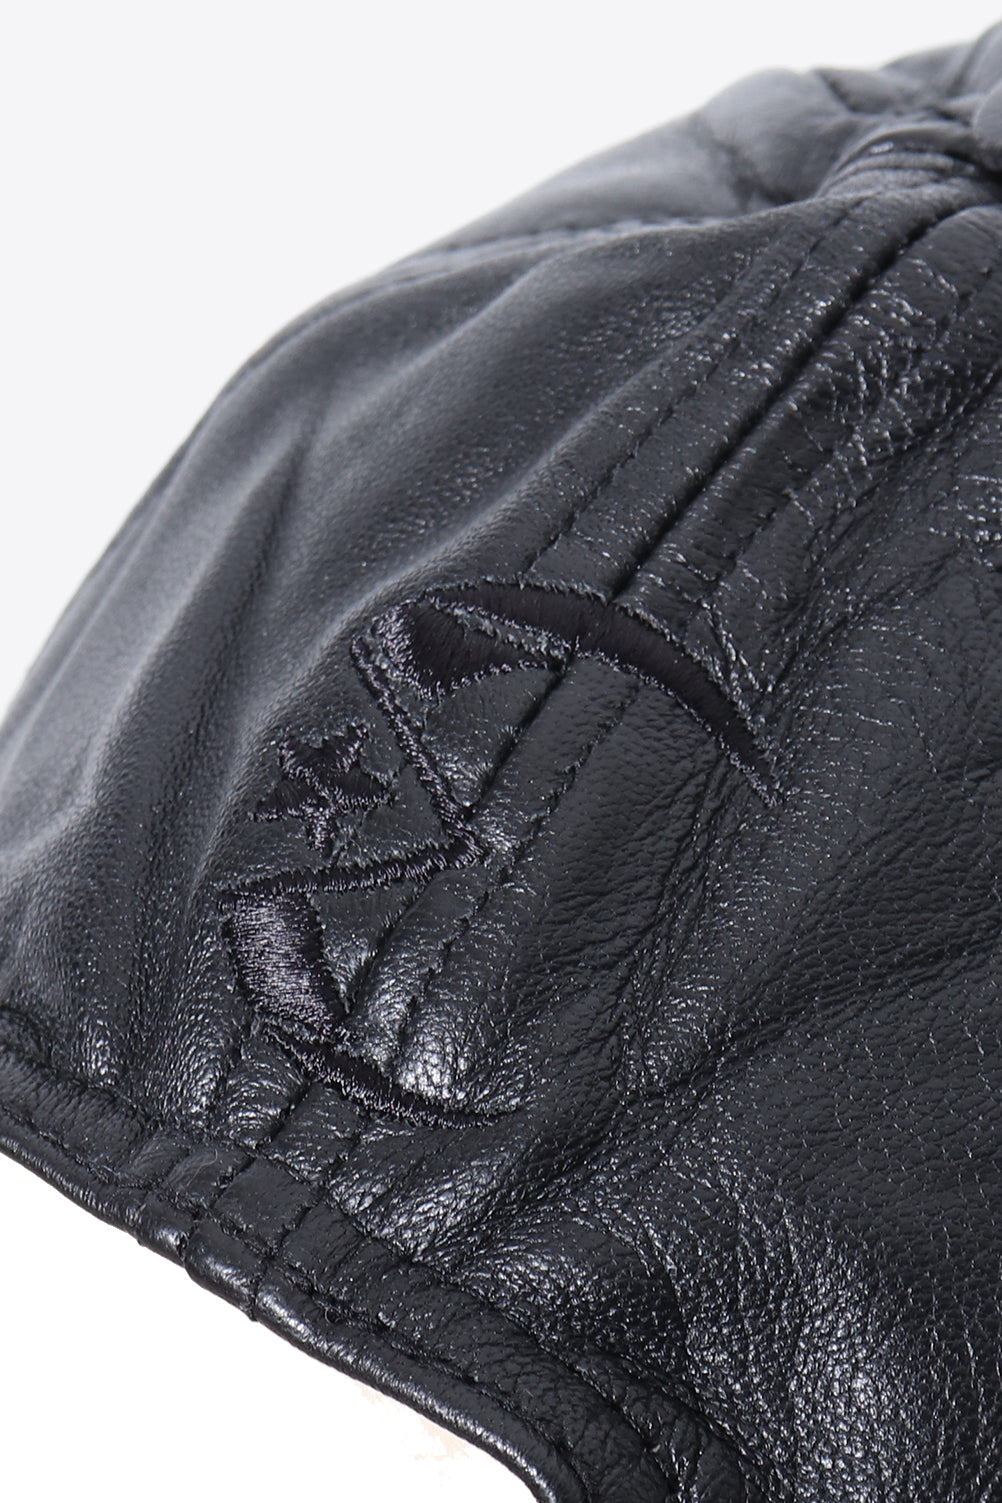 Leather MXM Cap (Black)